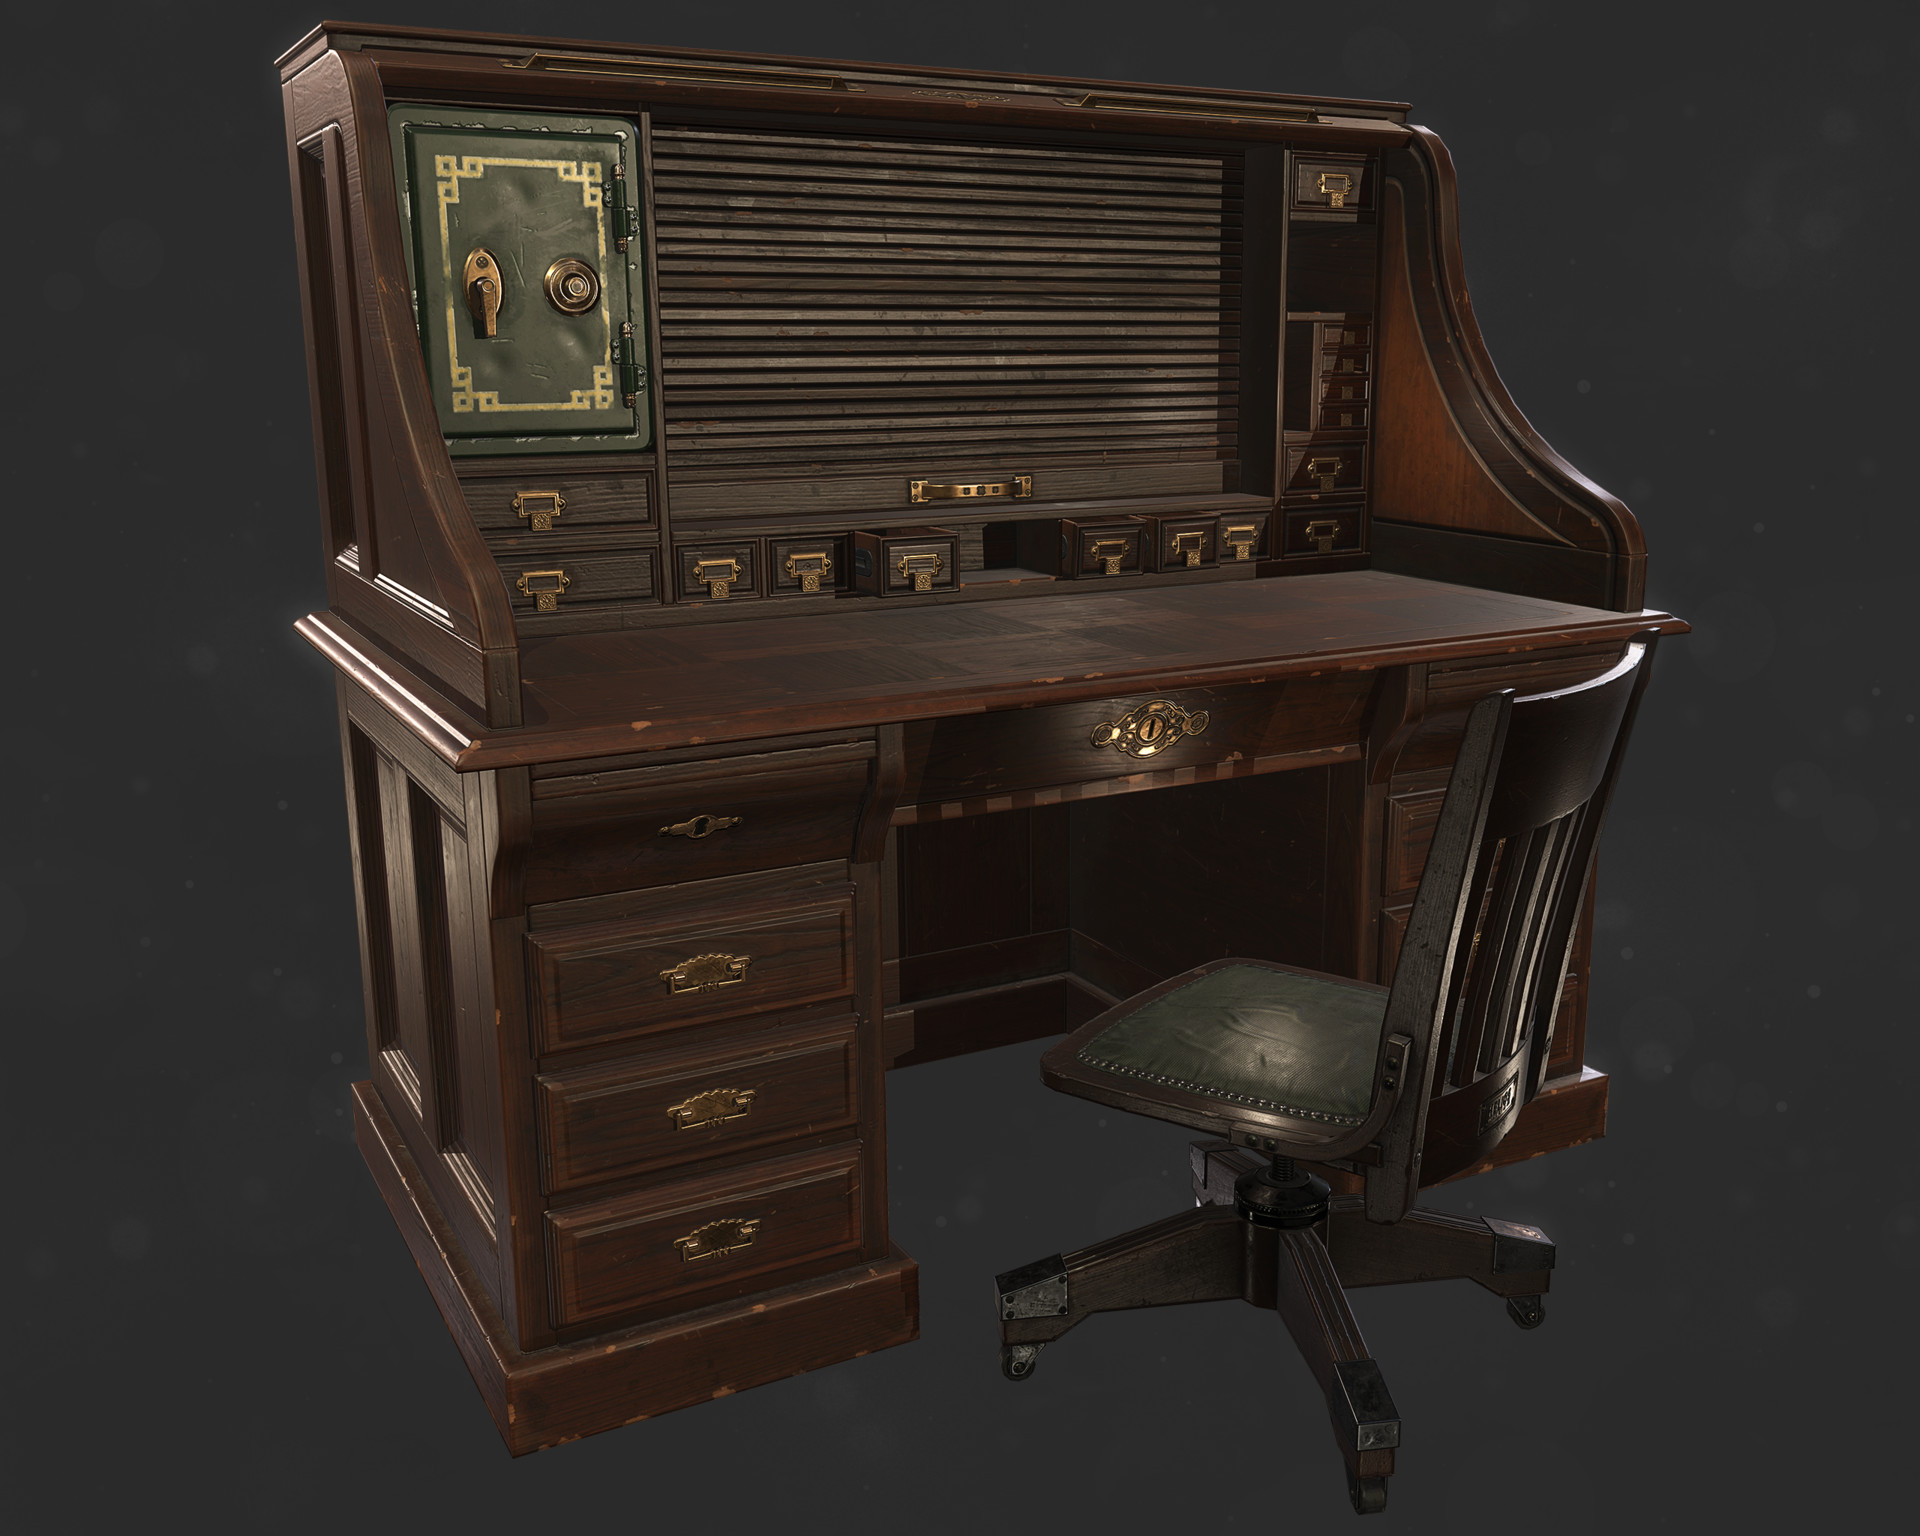 Marek Picheta - Antique office desk